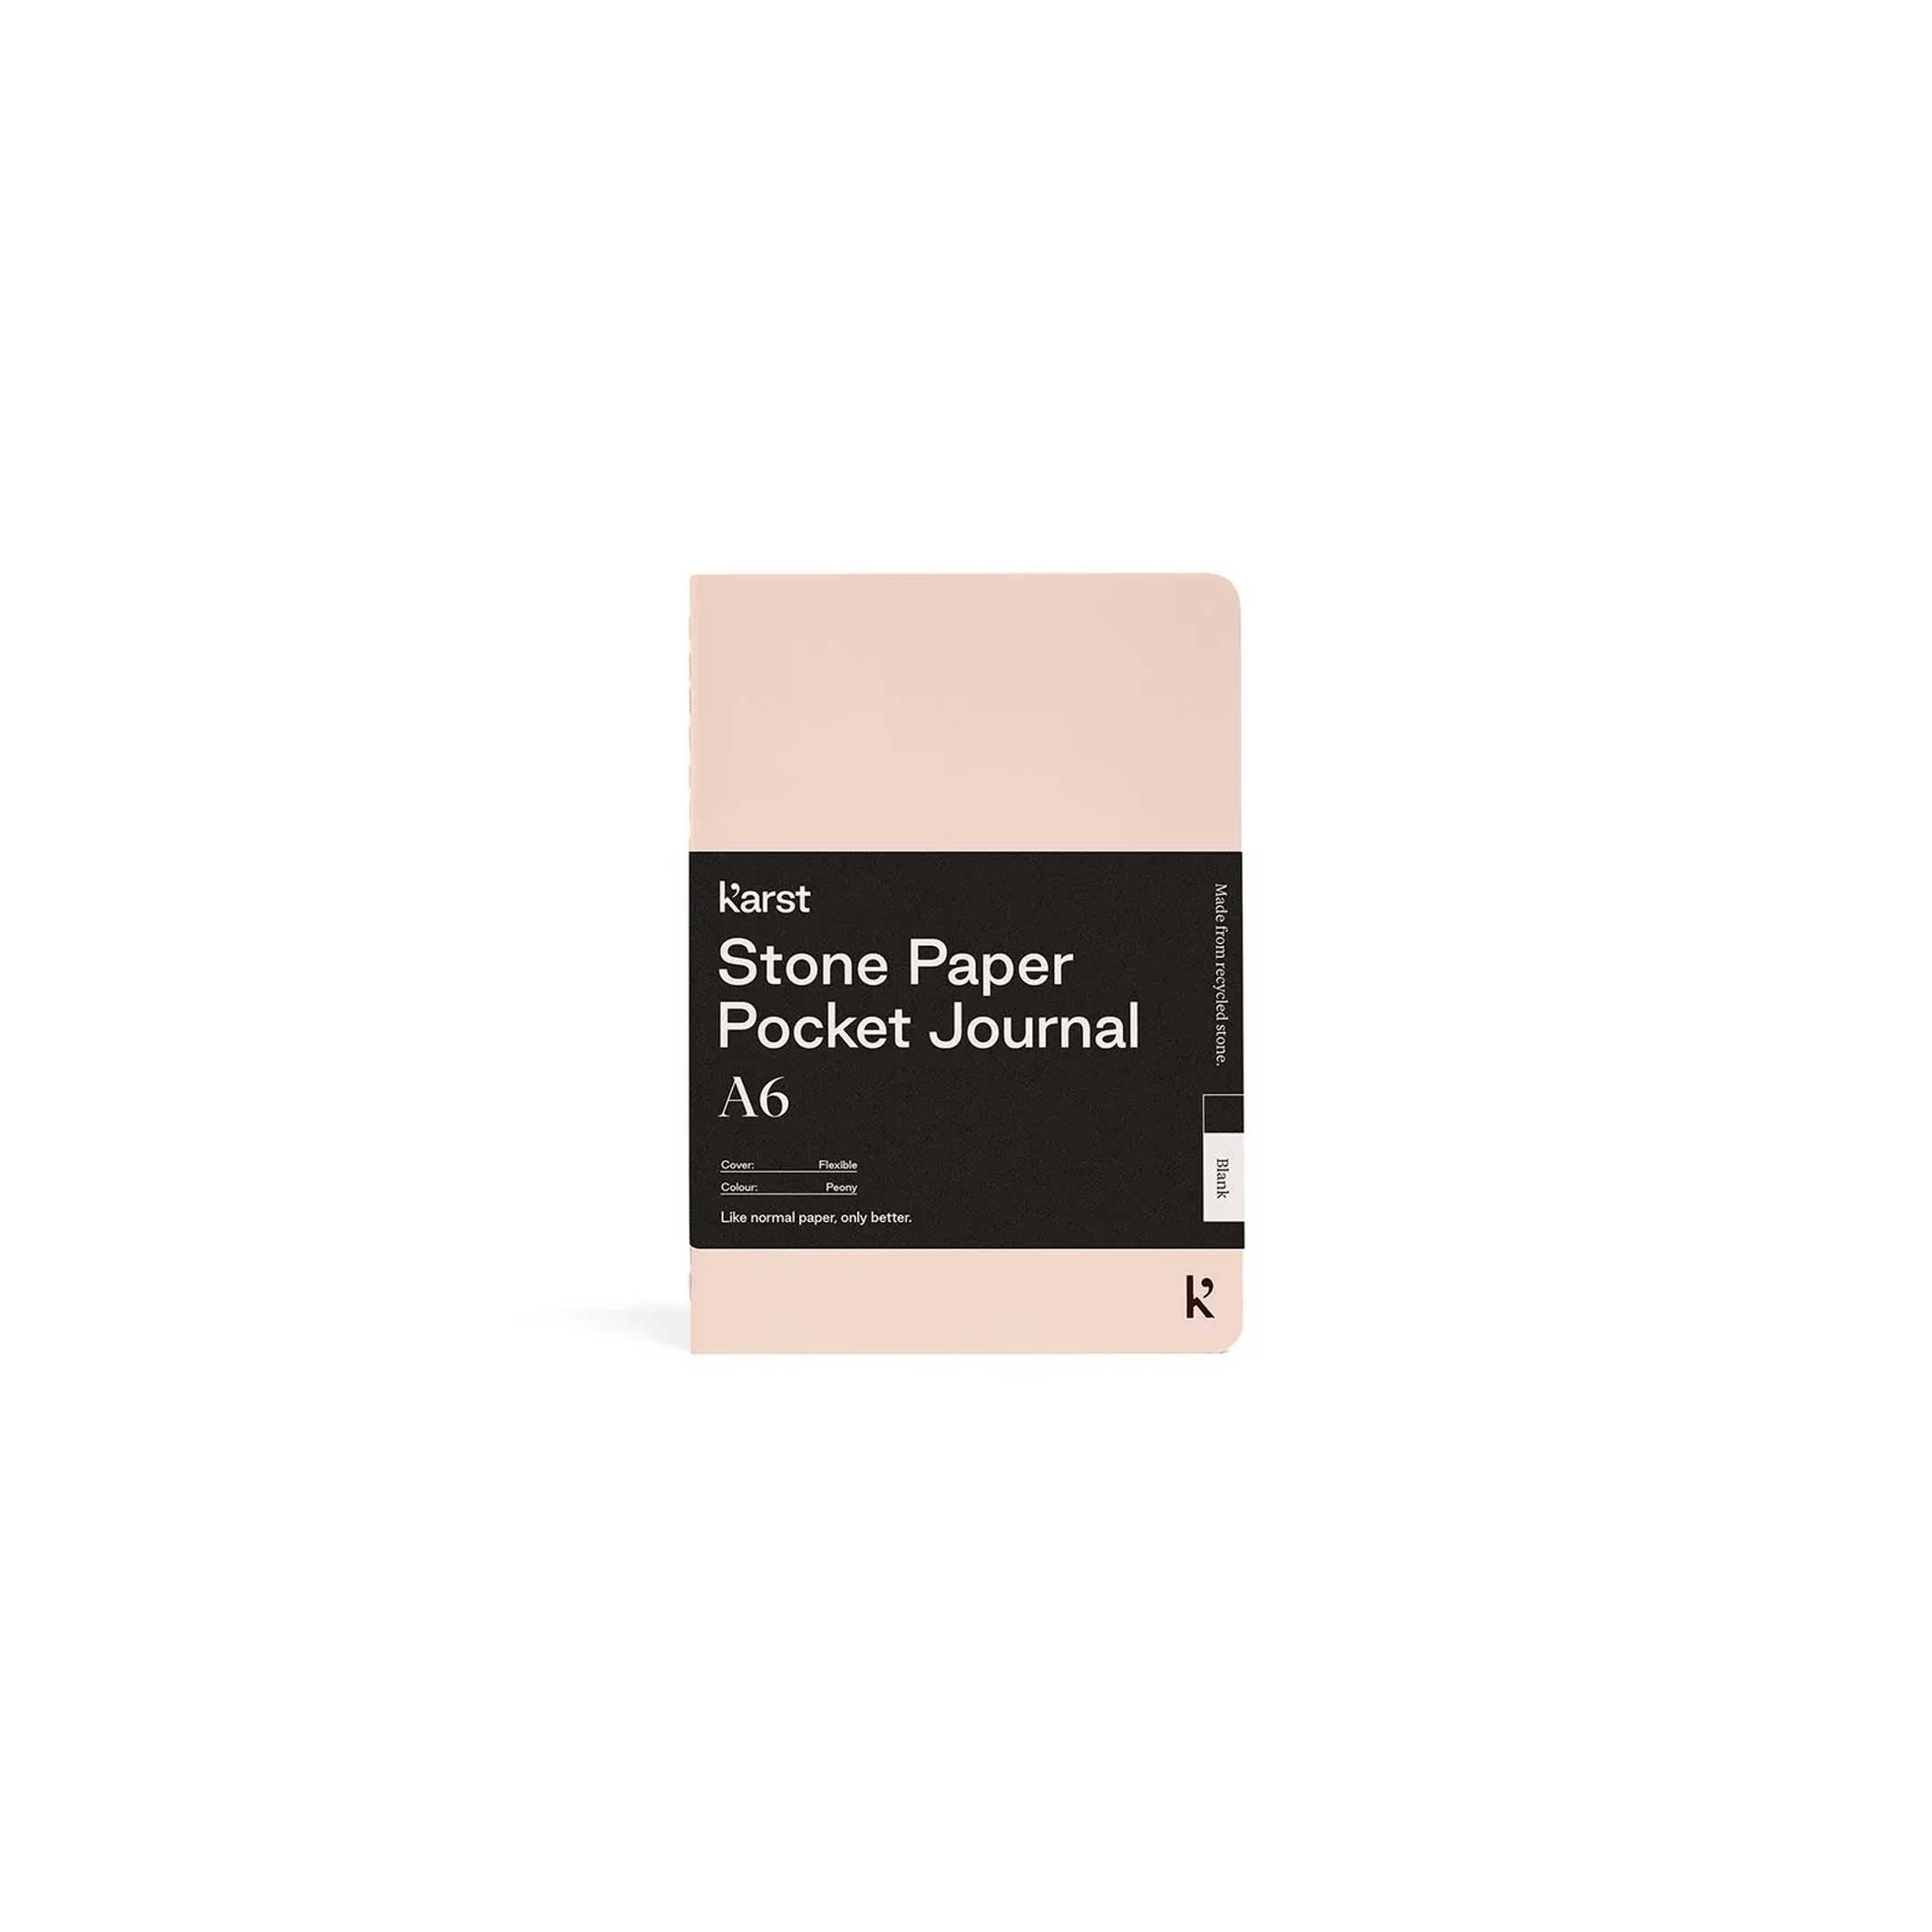 Softcover Pocket JOURNAL | Kleines NOTIZBUCH  | A6 blanko | Karst Stone Paper